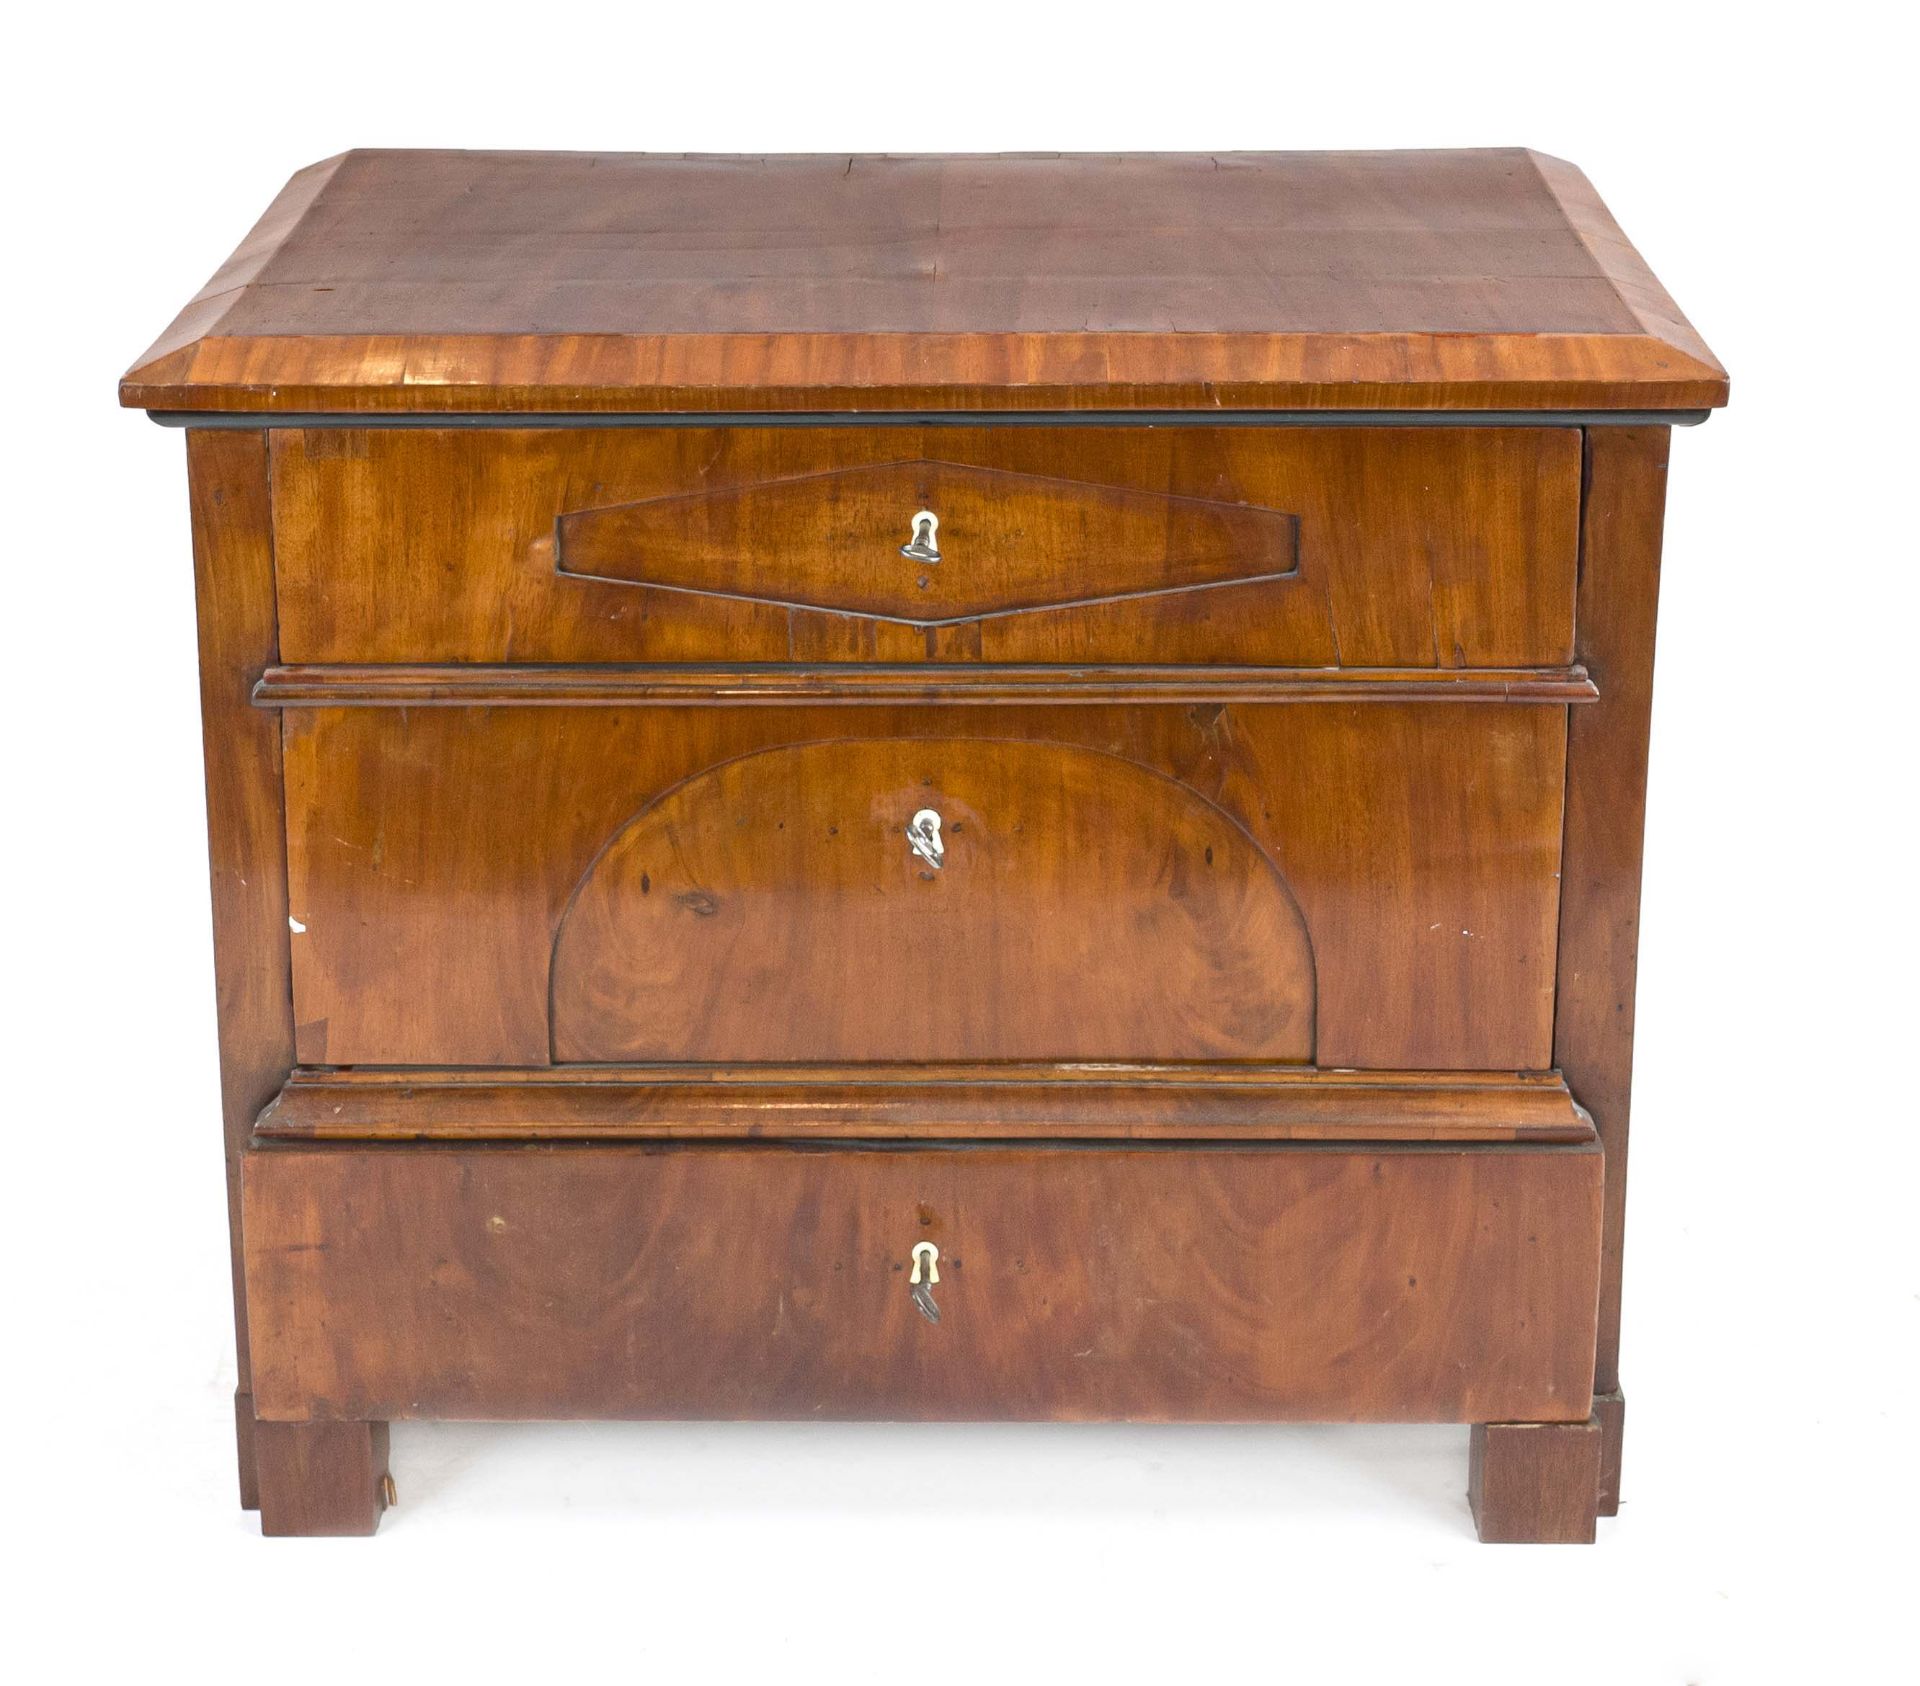 Biedermeier chest of drawers from around 1820, mahogany, three drawers with inset bone key